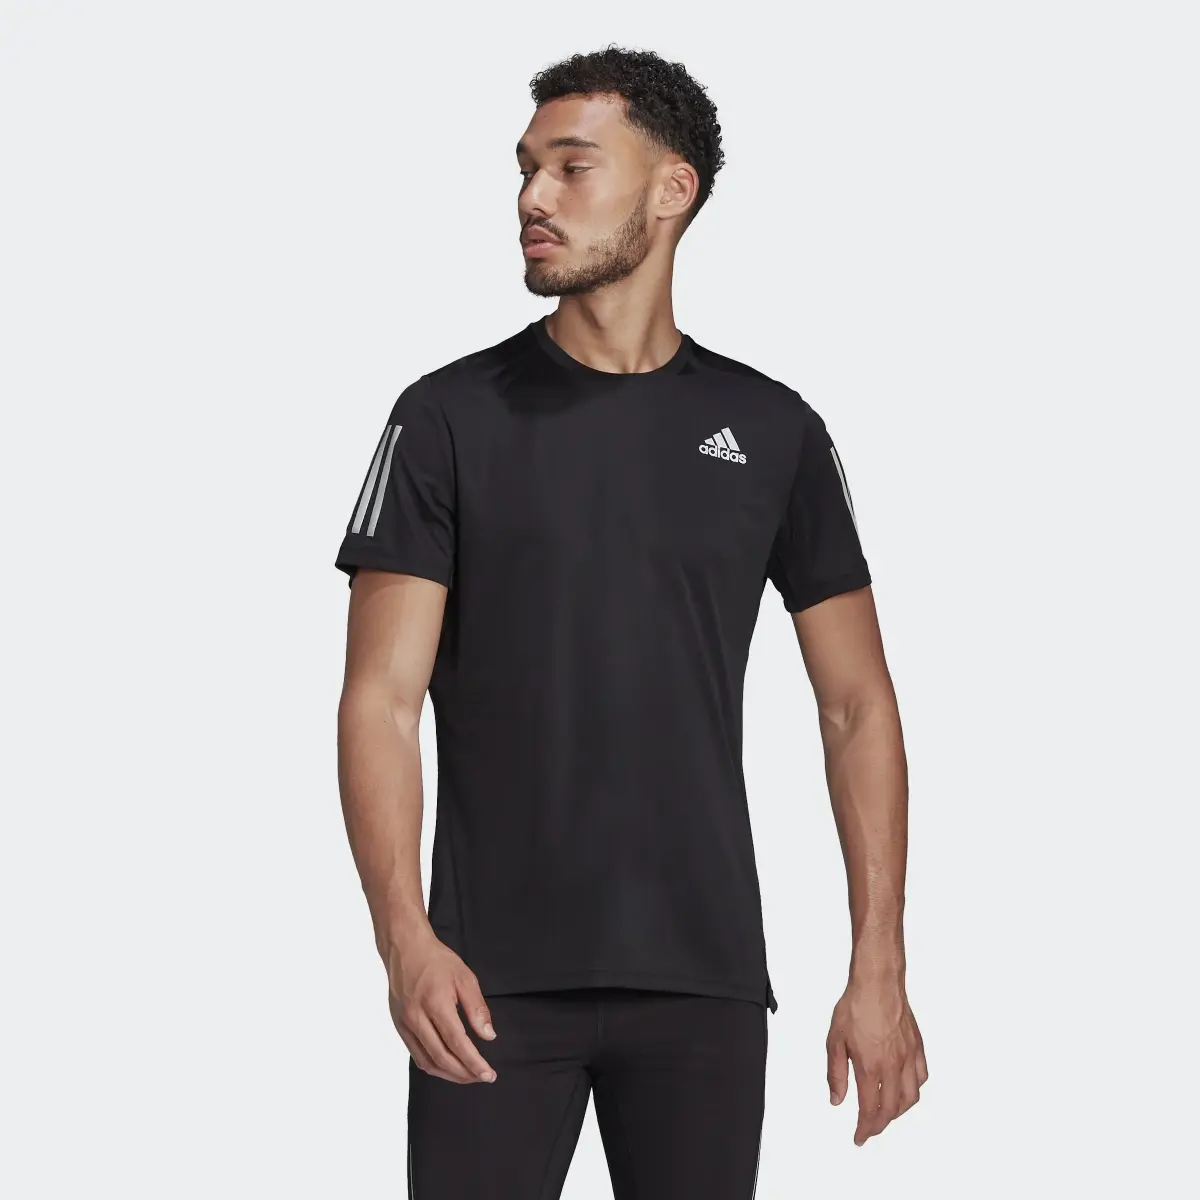 Adidas Own the Run Tişört. 1